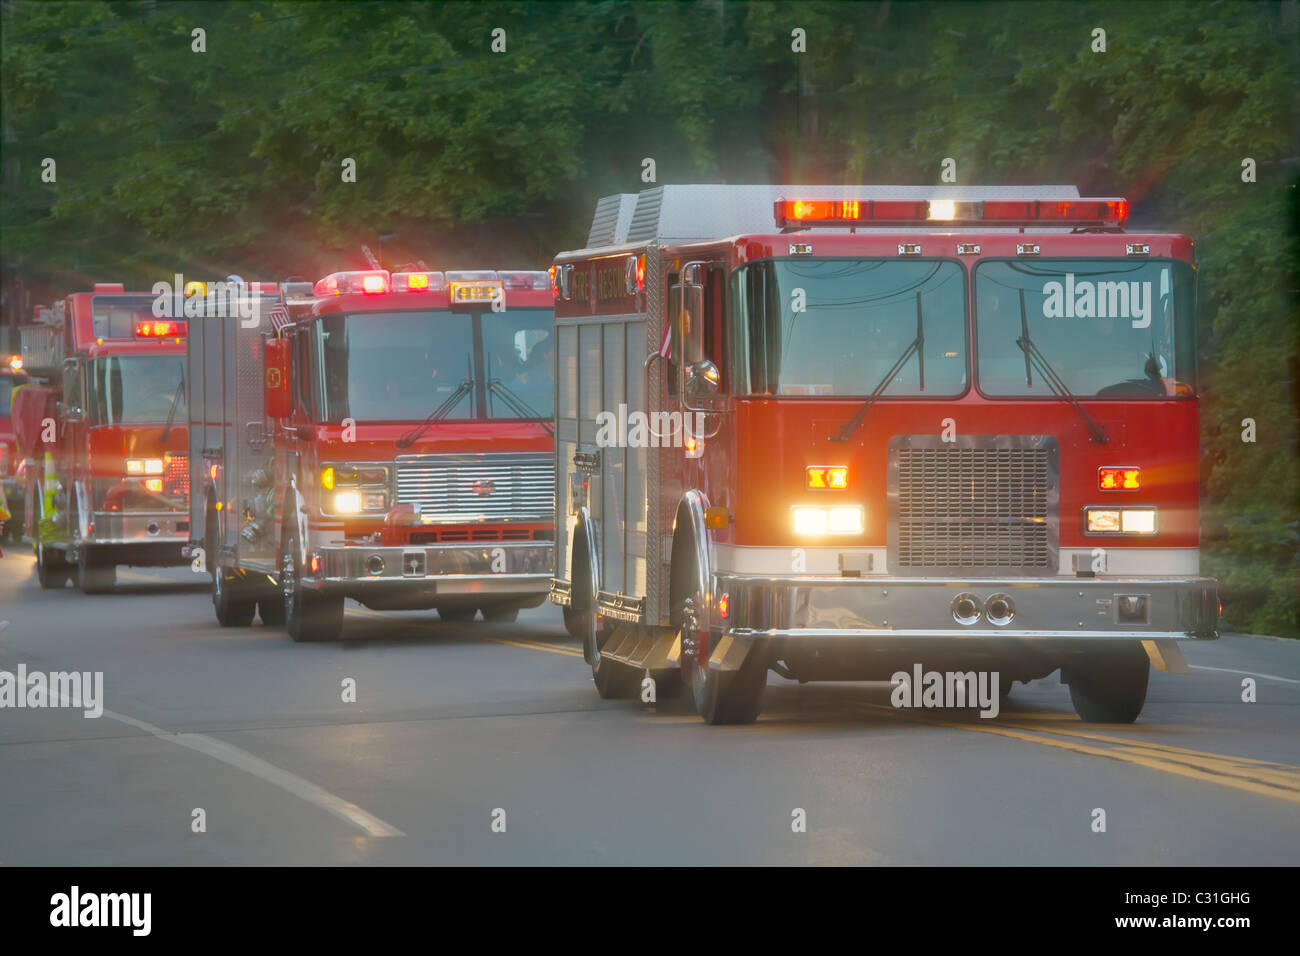 Three fire trucks on street with lights on Stock Photo